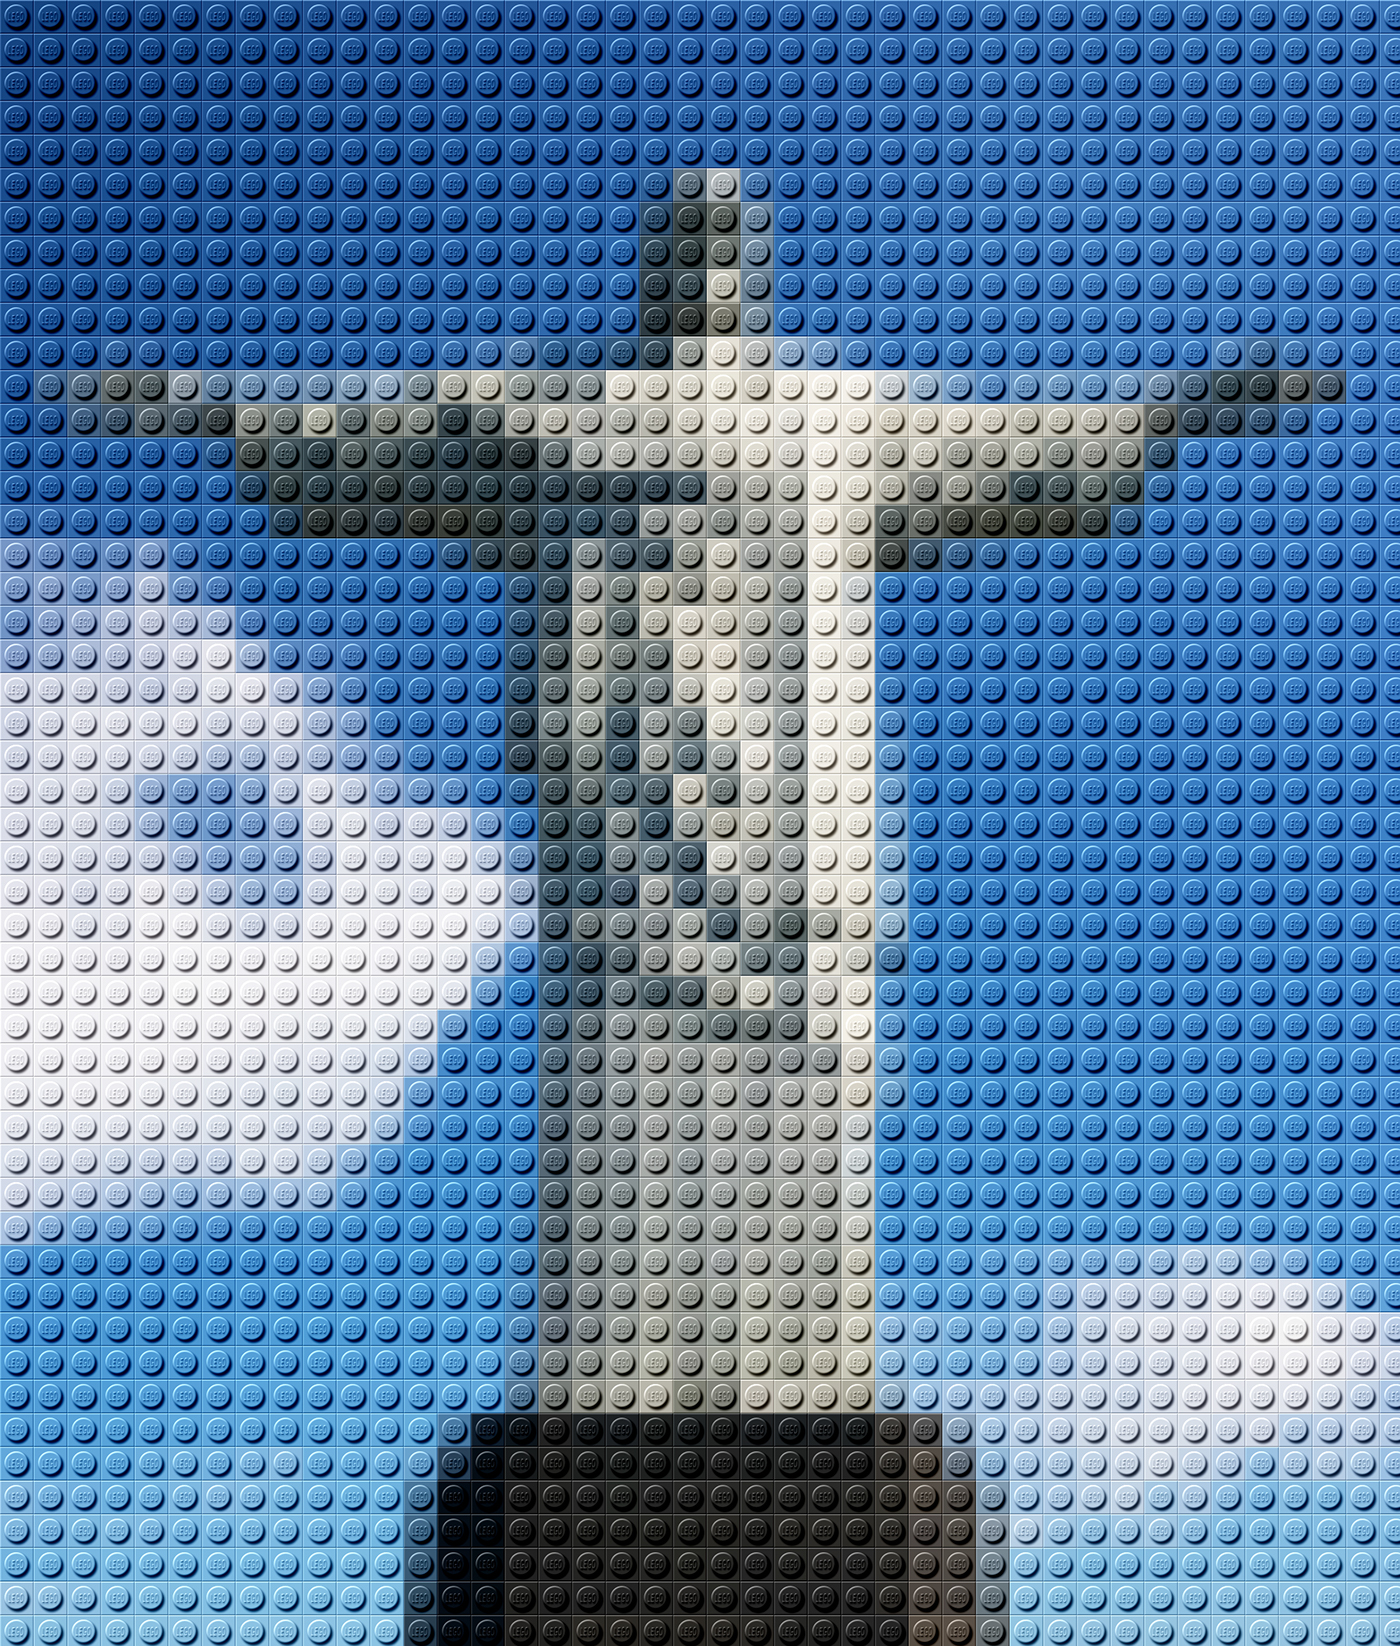 Rio de Janeiro LEGO photoshop